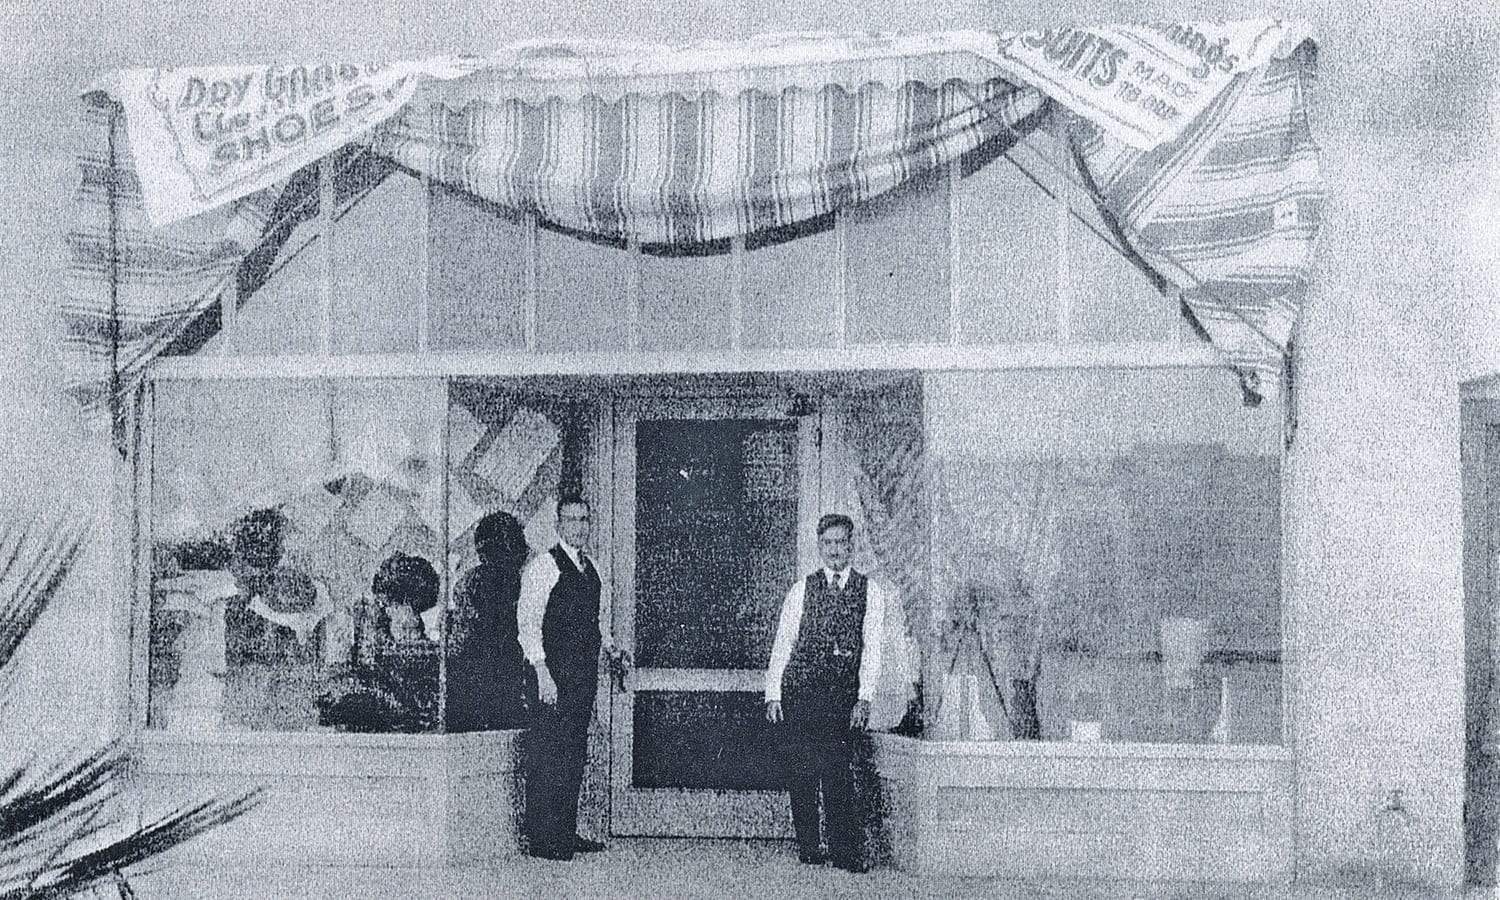 Serrano Brothers Popular Store, 1919